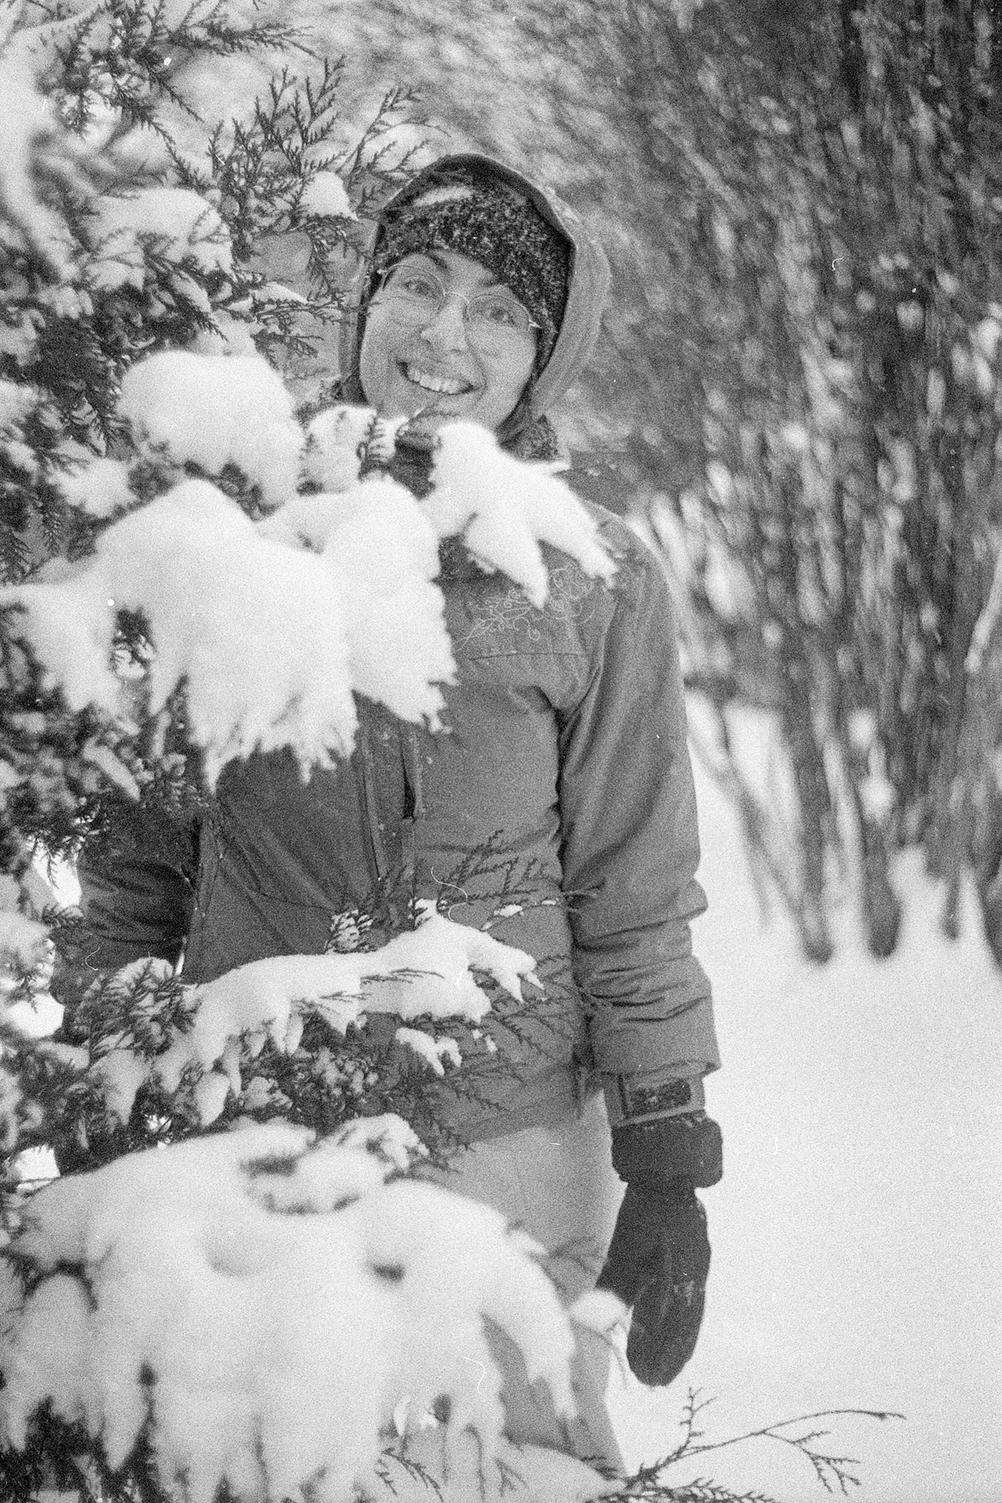 Photo of my wife next to a snowy tree.